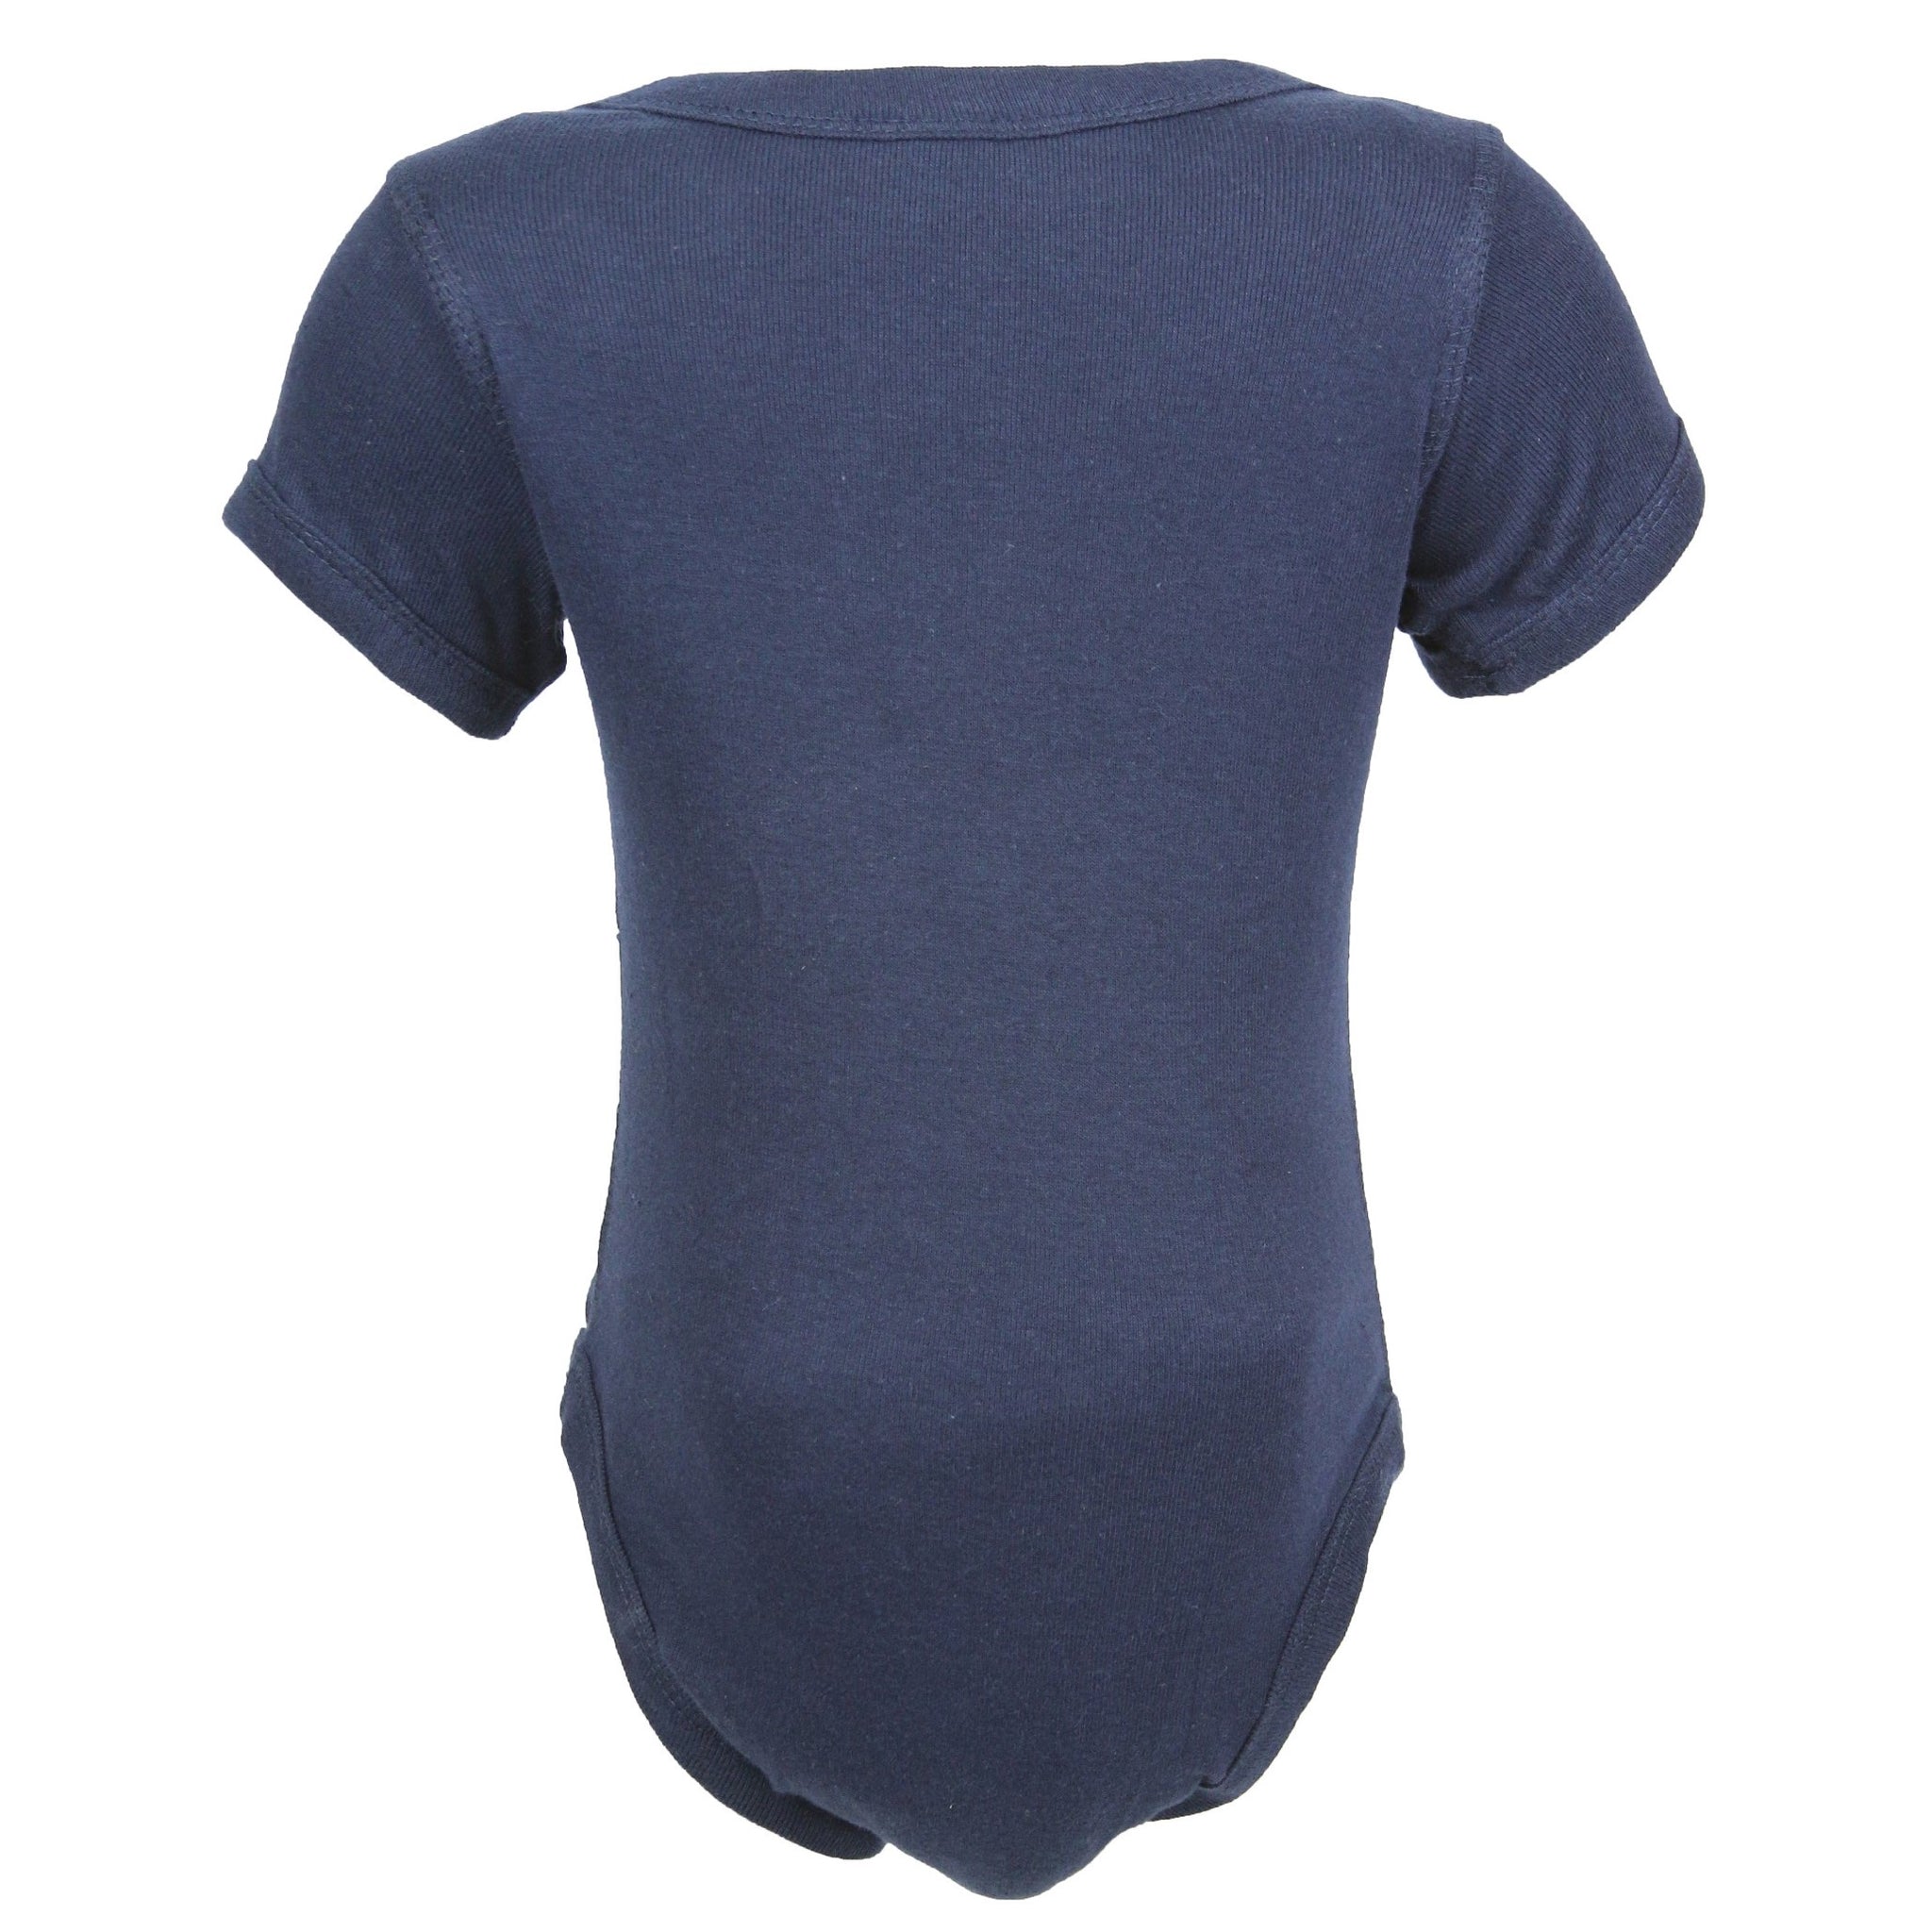 Navy Short Sleeve Bodysuit, Wonsie, Wonsie